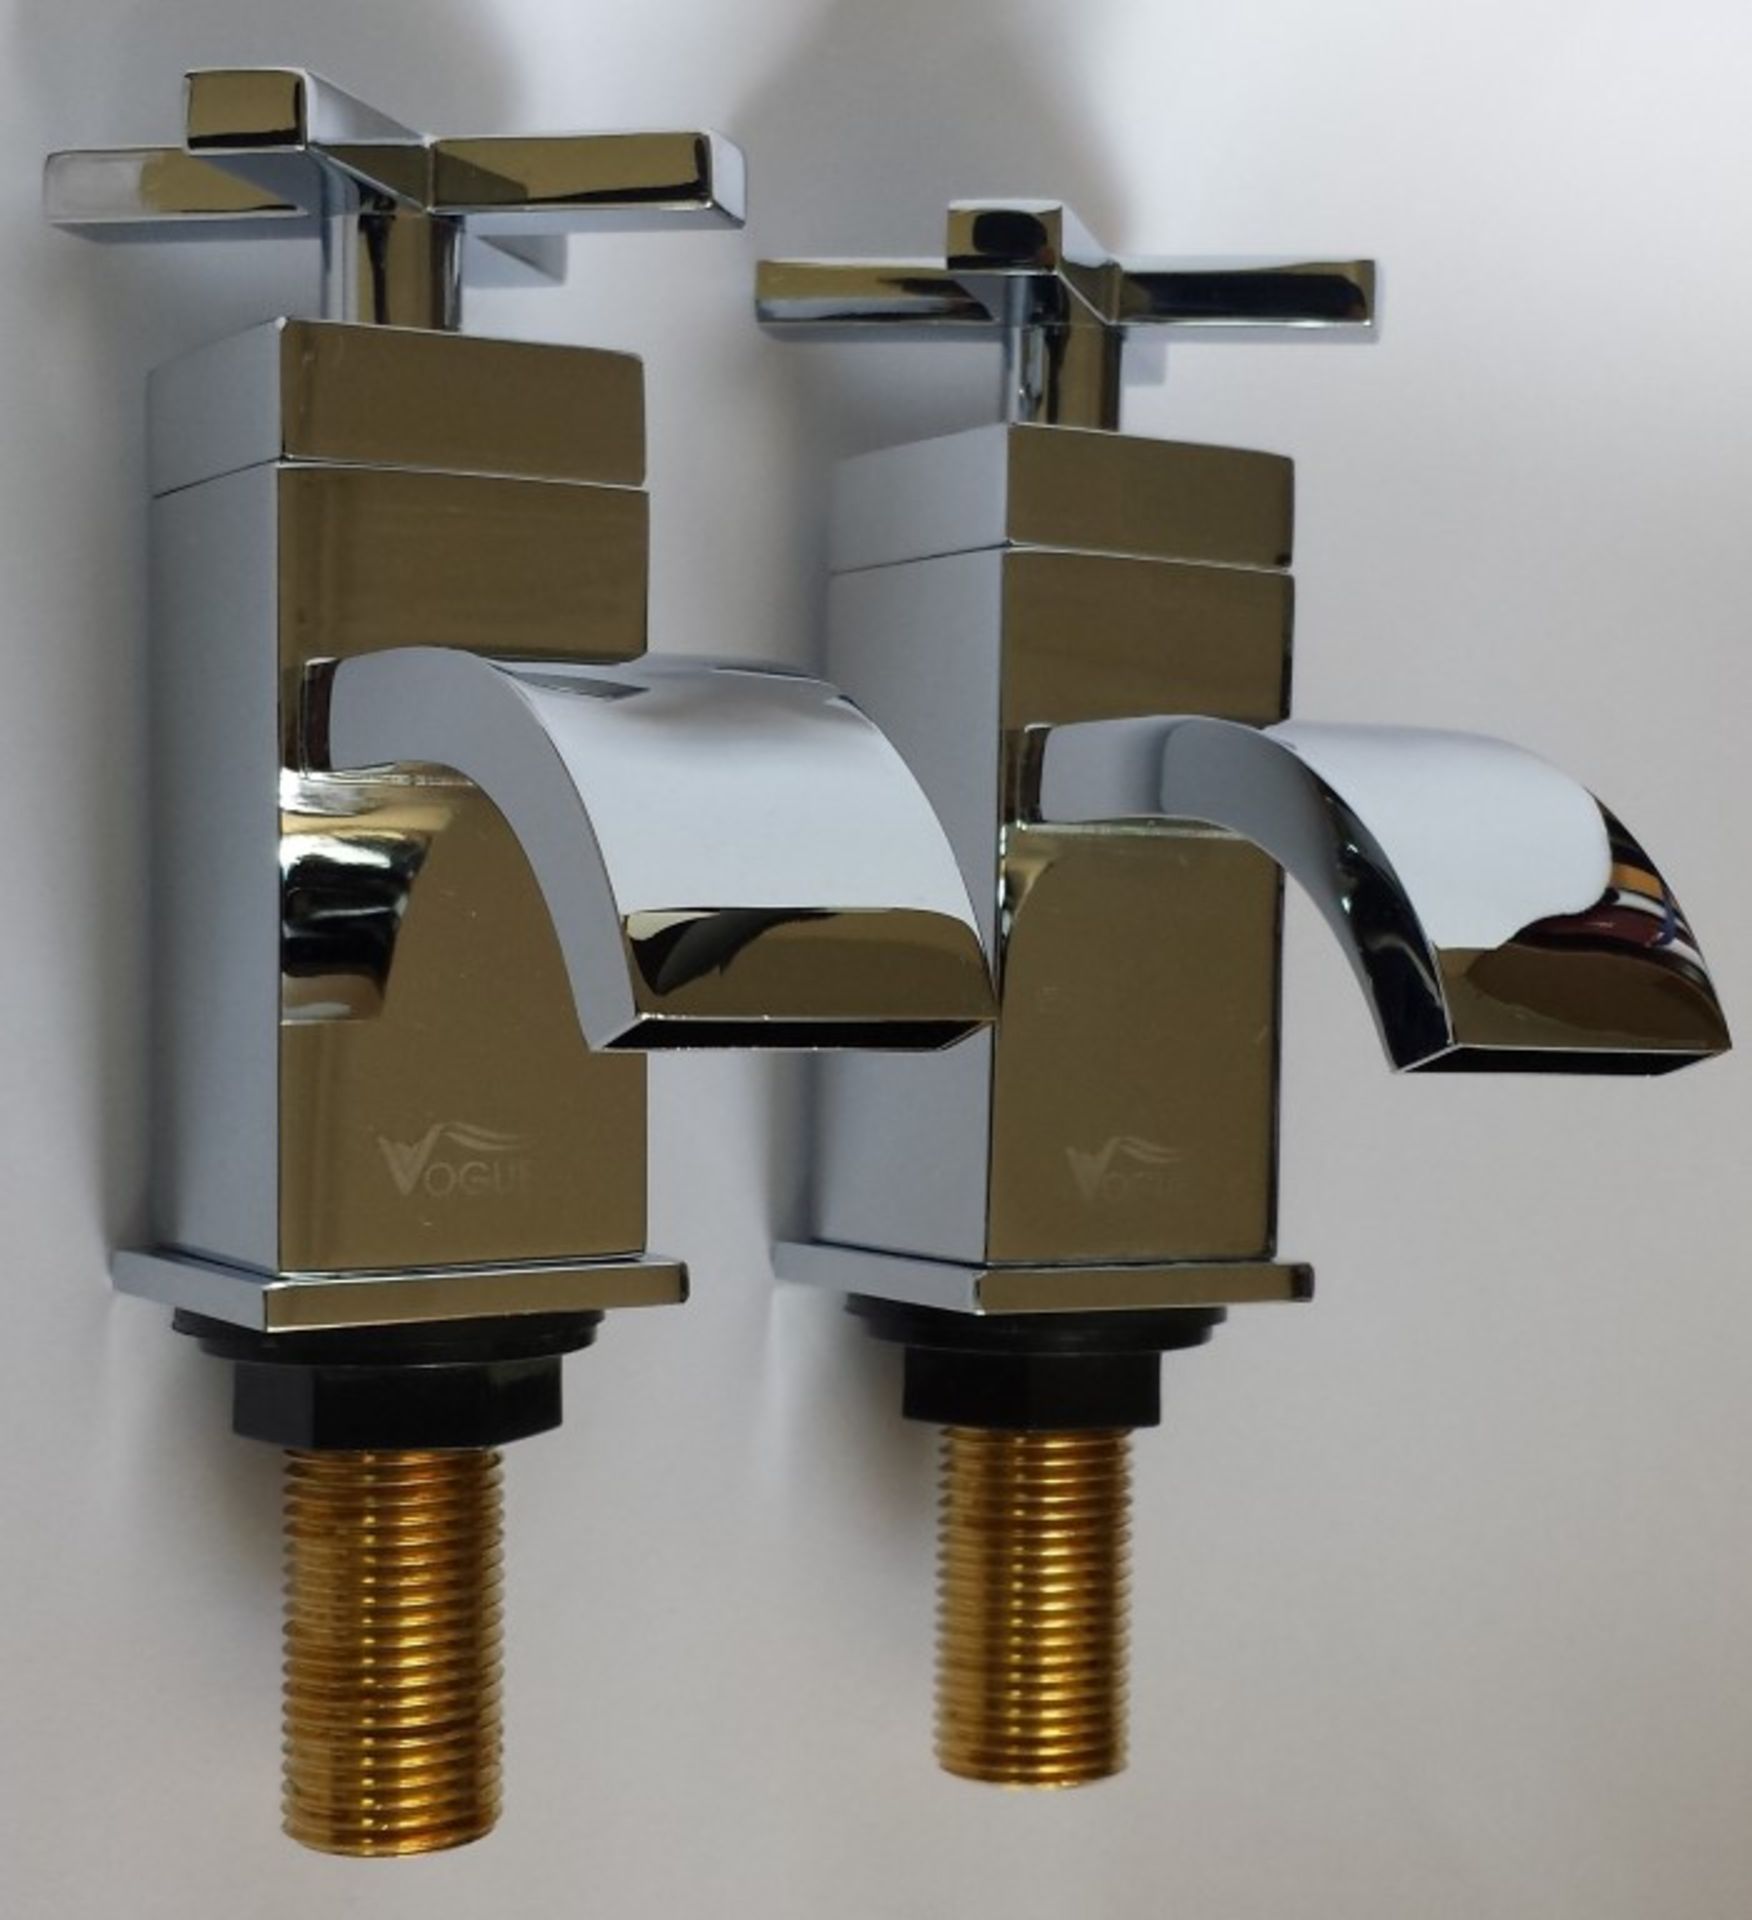 1 x Vogue Series 6 Crosshead Basin Taps - Vogue Bathrooms Platinum Brassware Collection - - Image 4 of 10